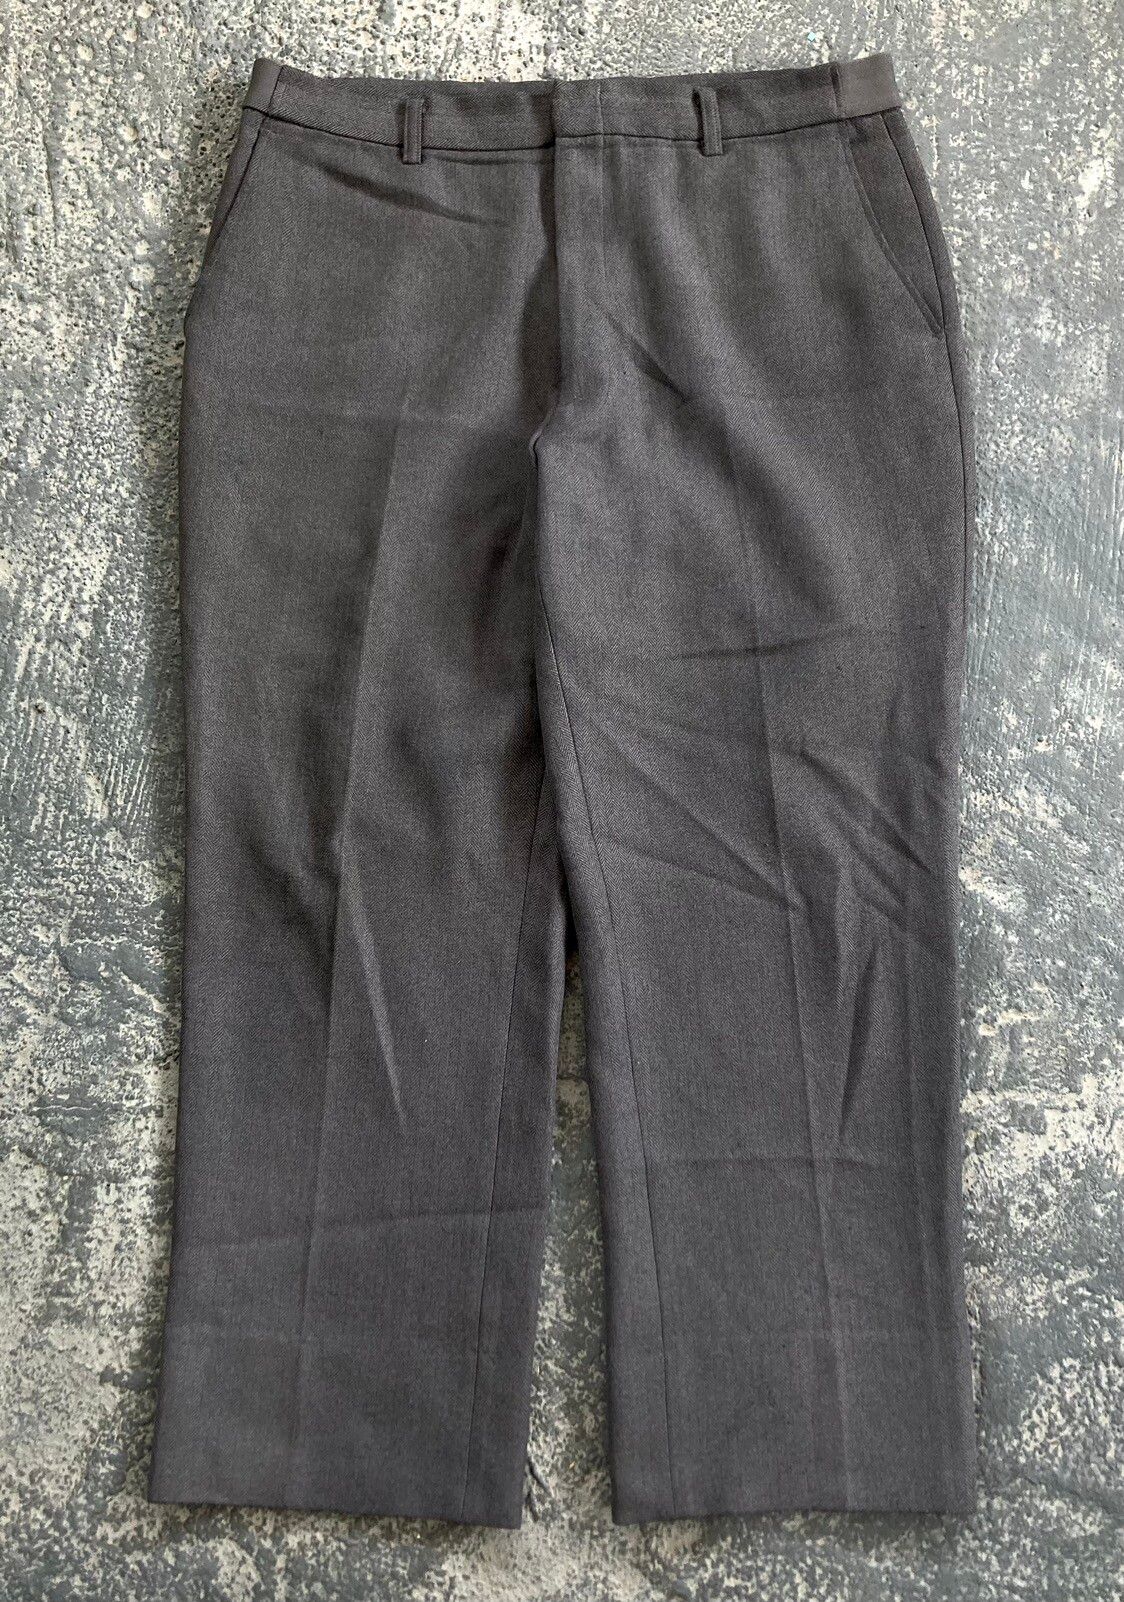 Vintage Japanese Dark Gray Baggy Slacks - 1